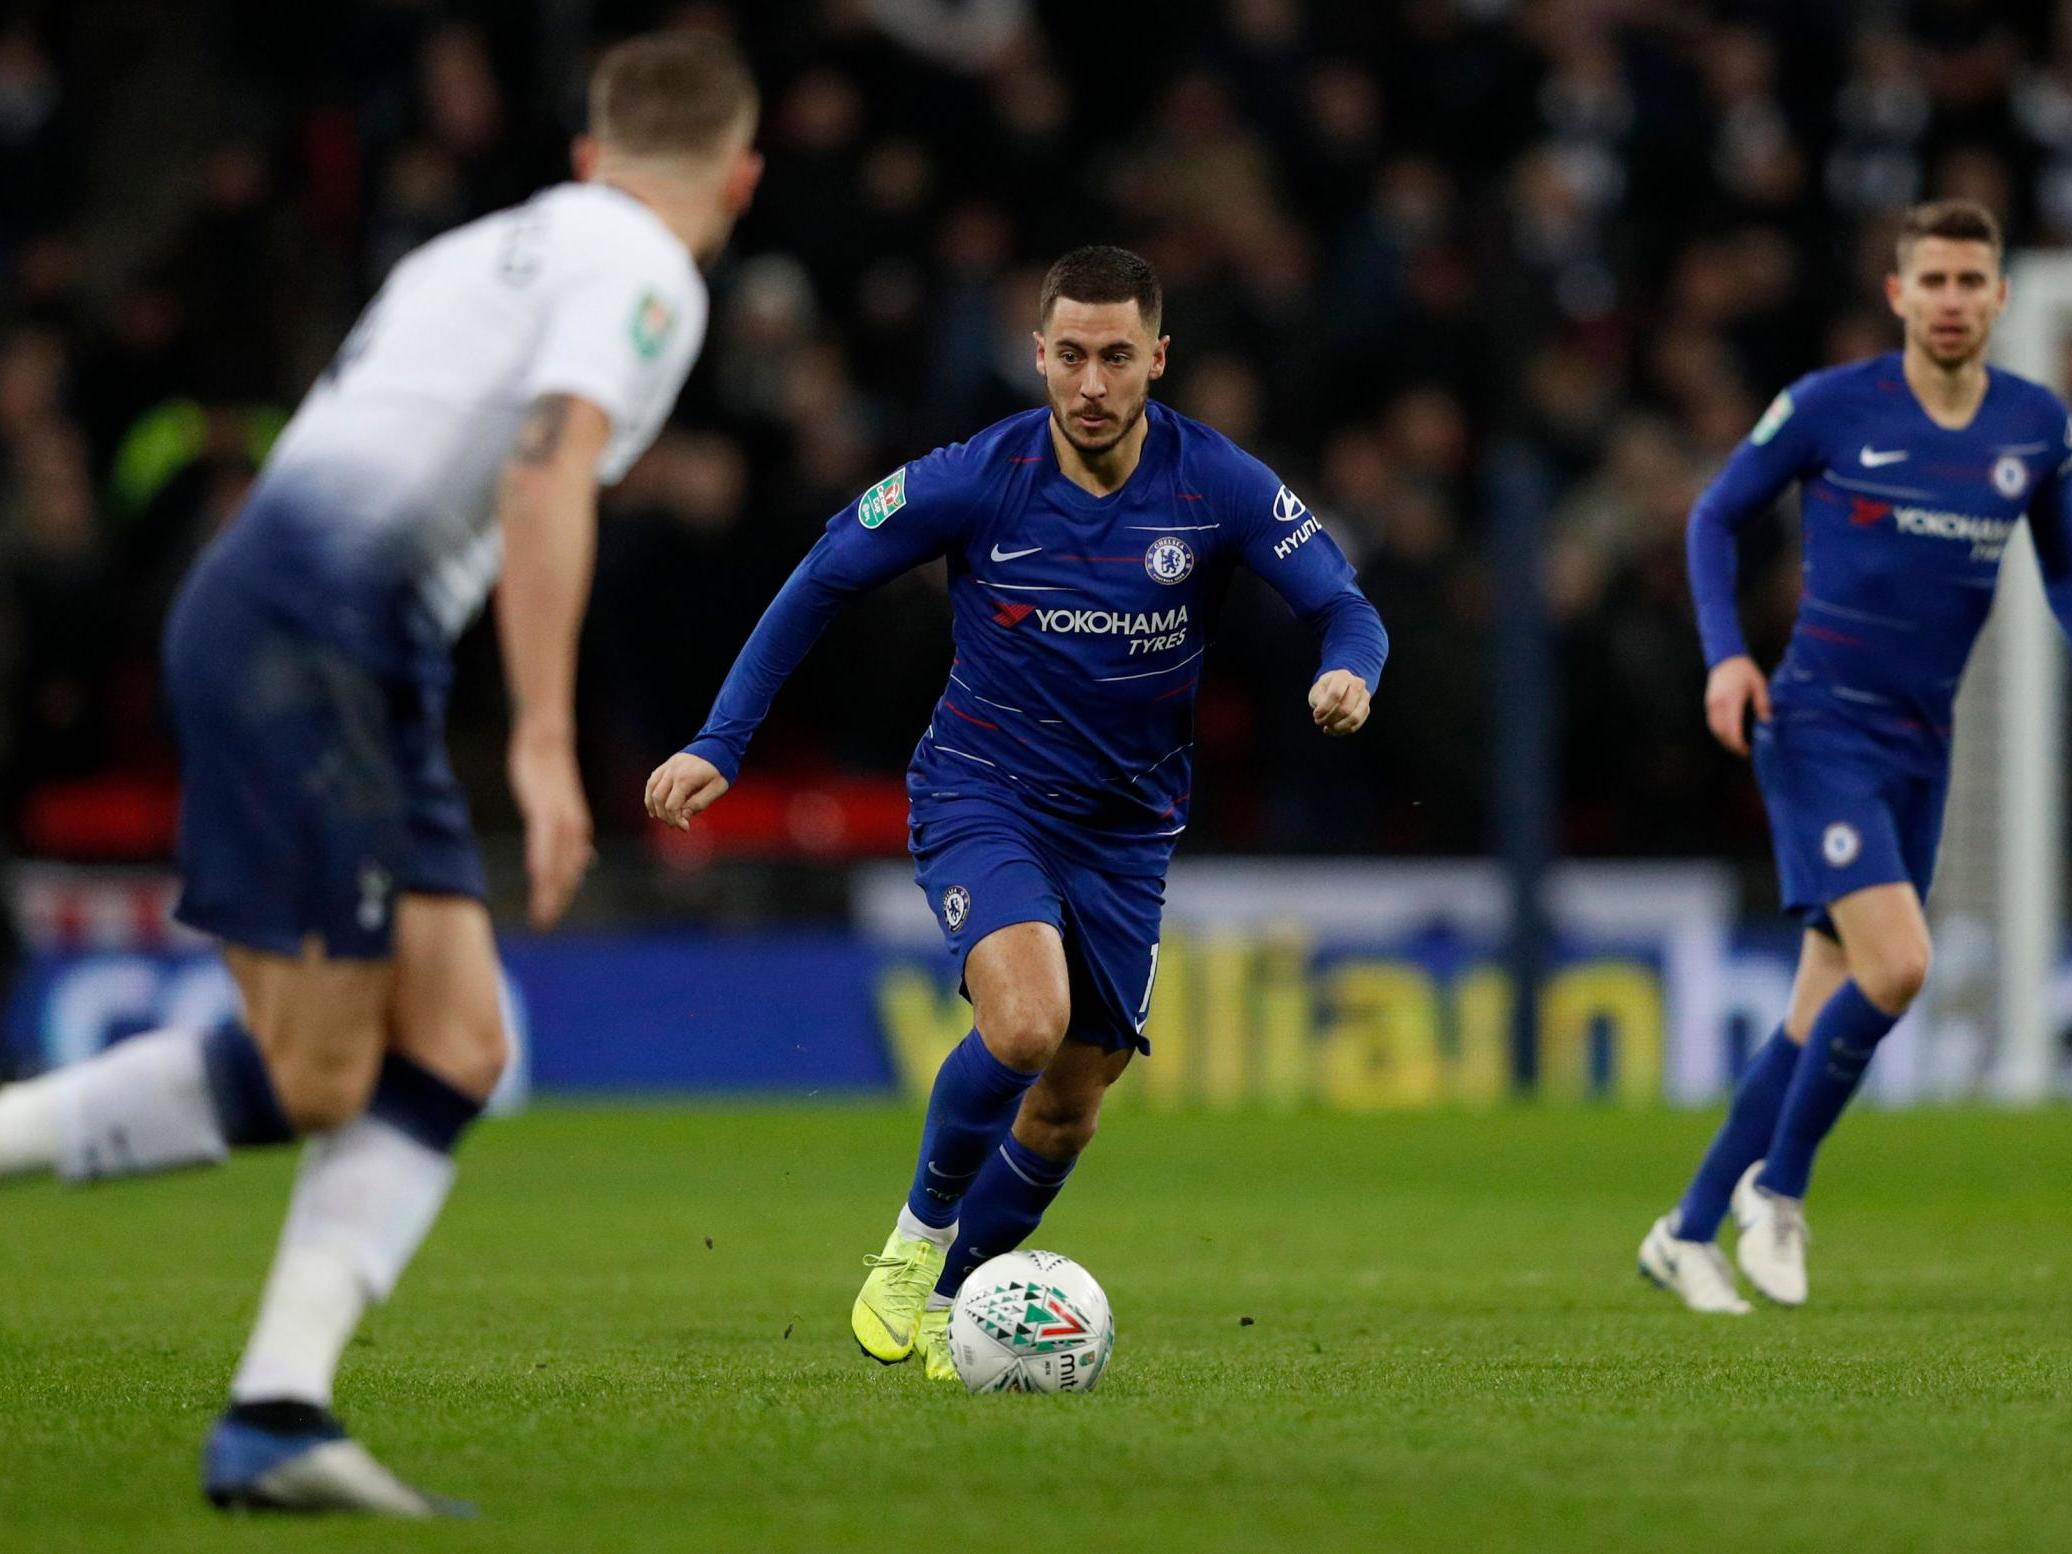 Eden Hazard impressed in Chelsea's defeat to Tottenham